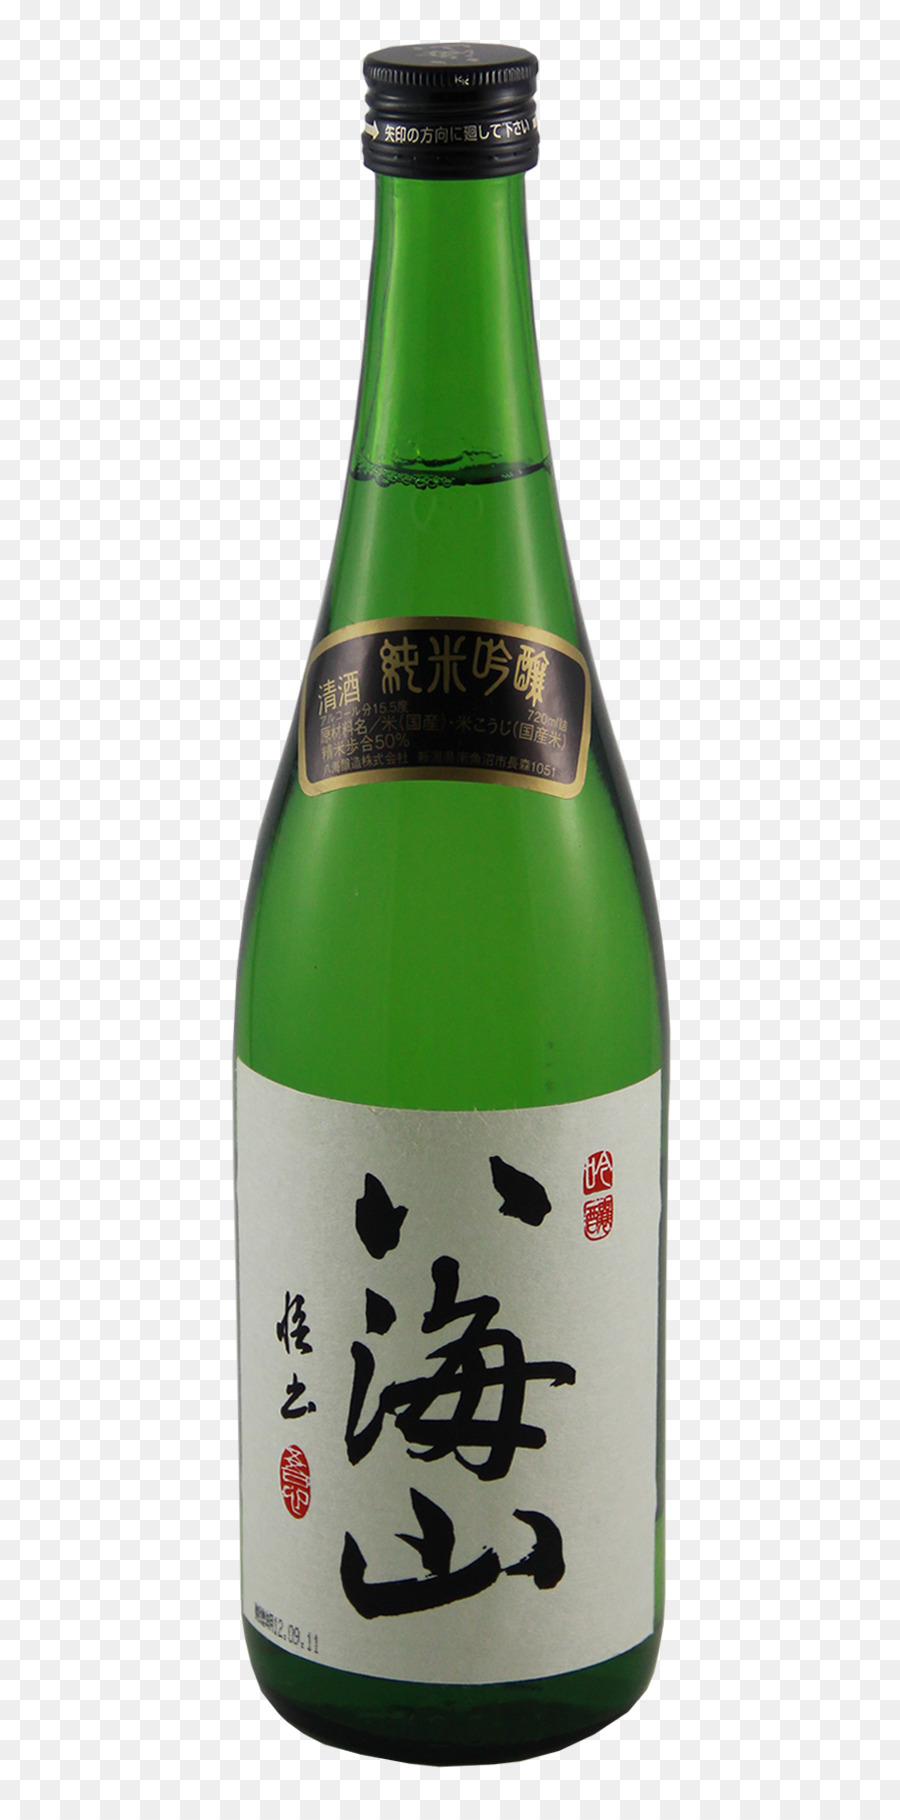 Mt. Hakkai Liquore Birra Amore bottiglia di Vetro - Birra